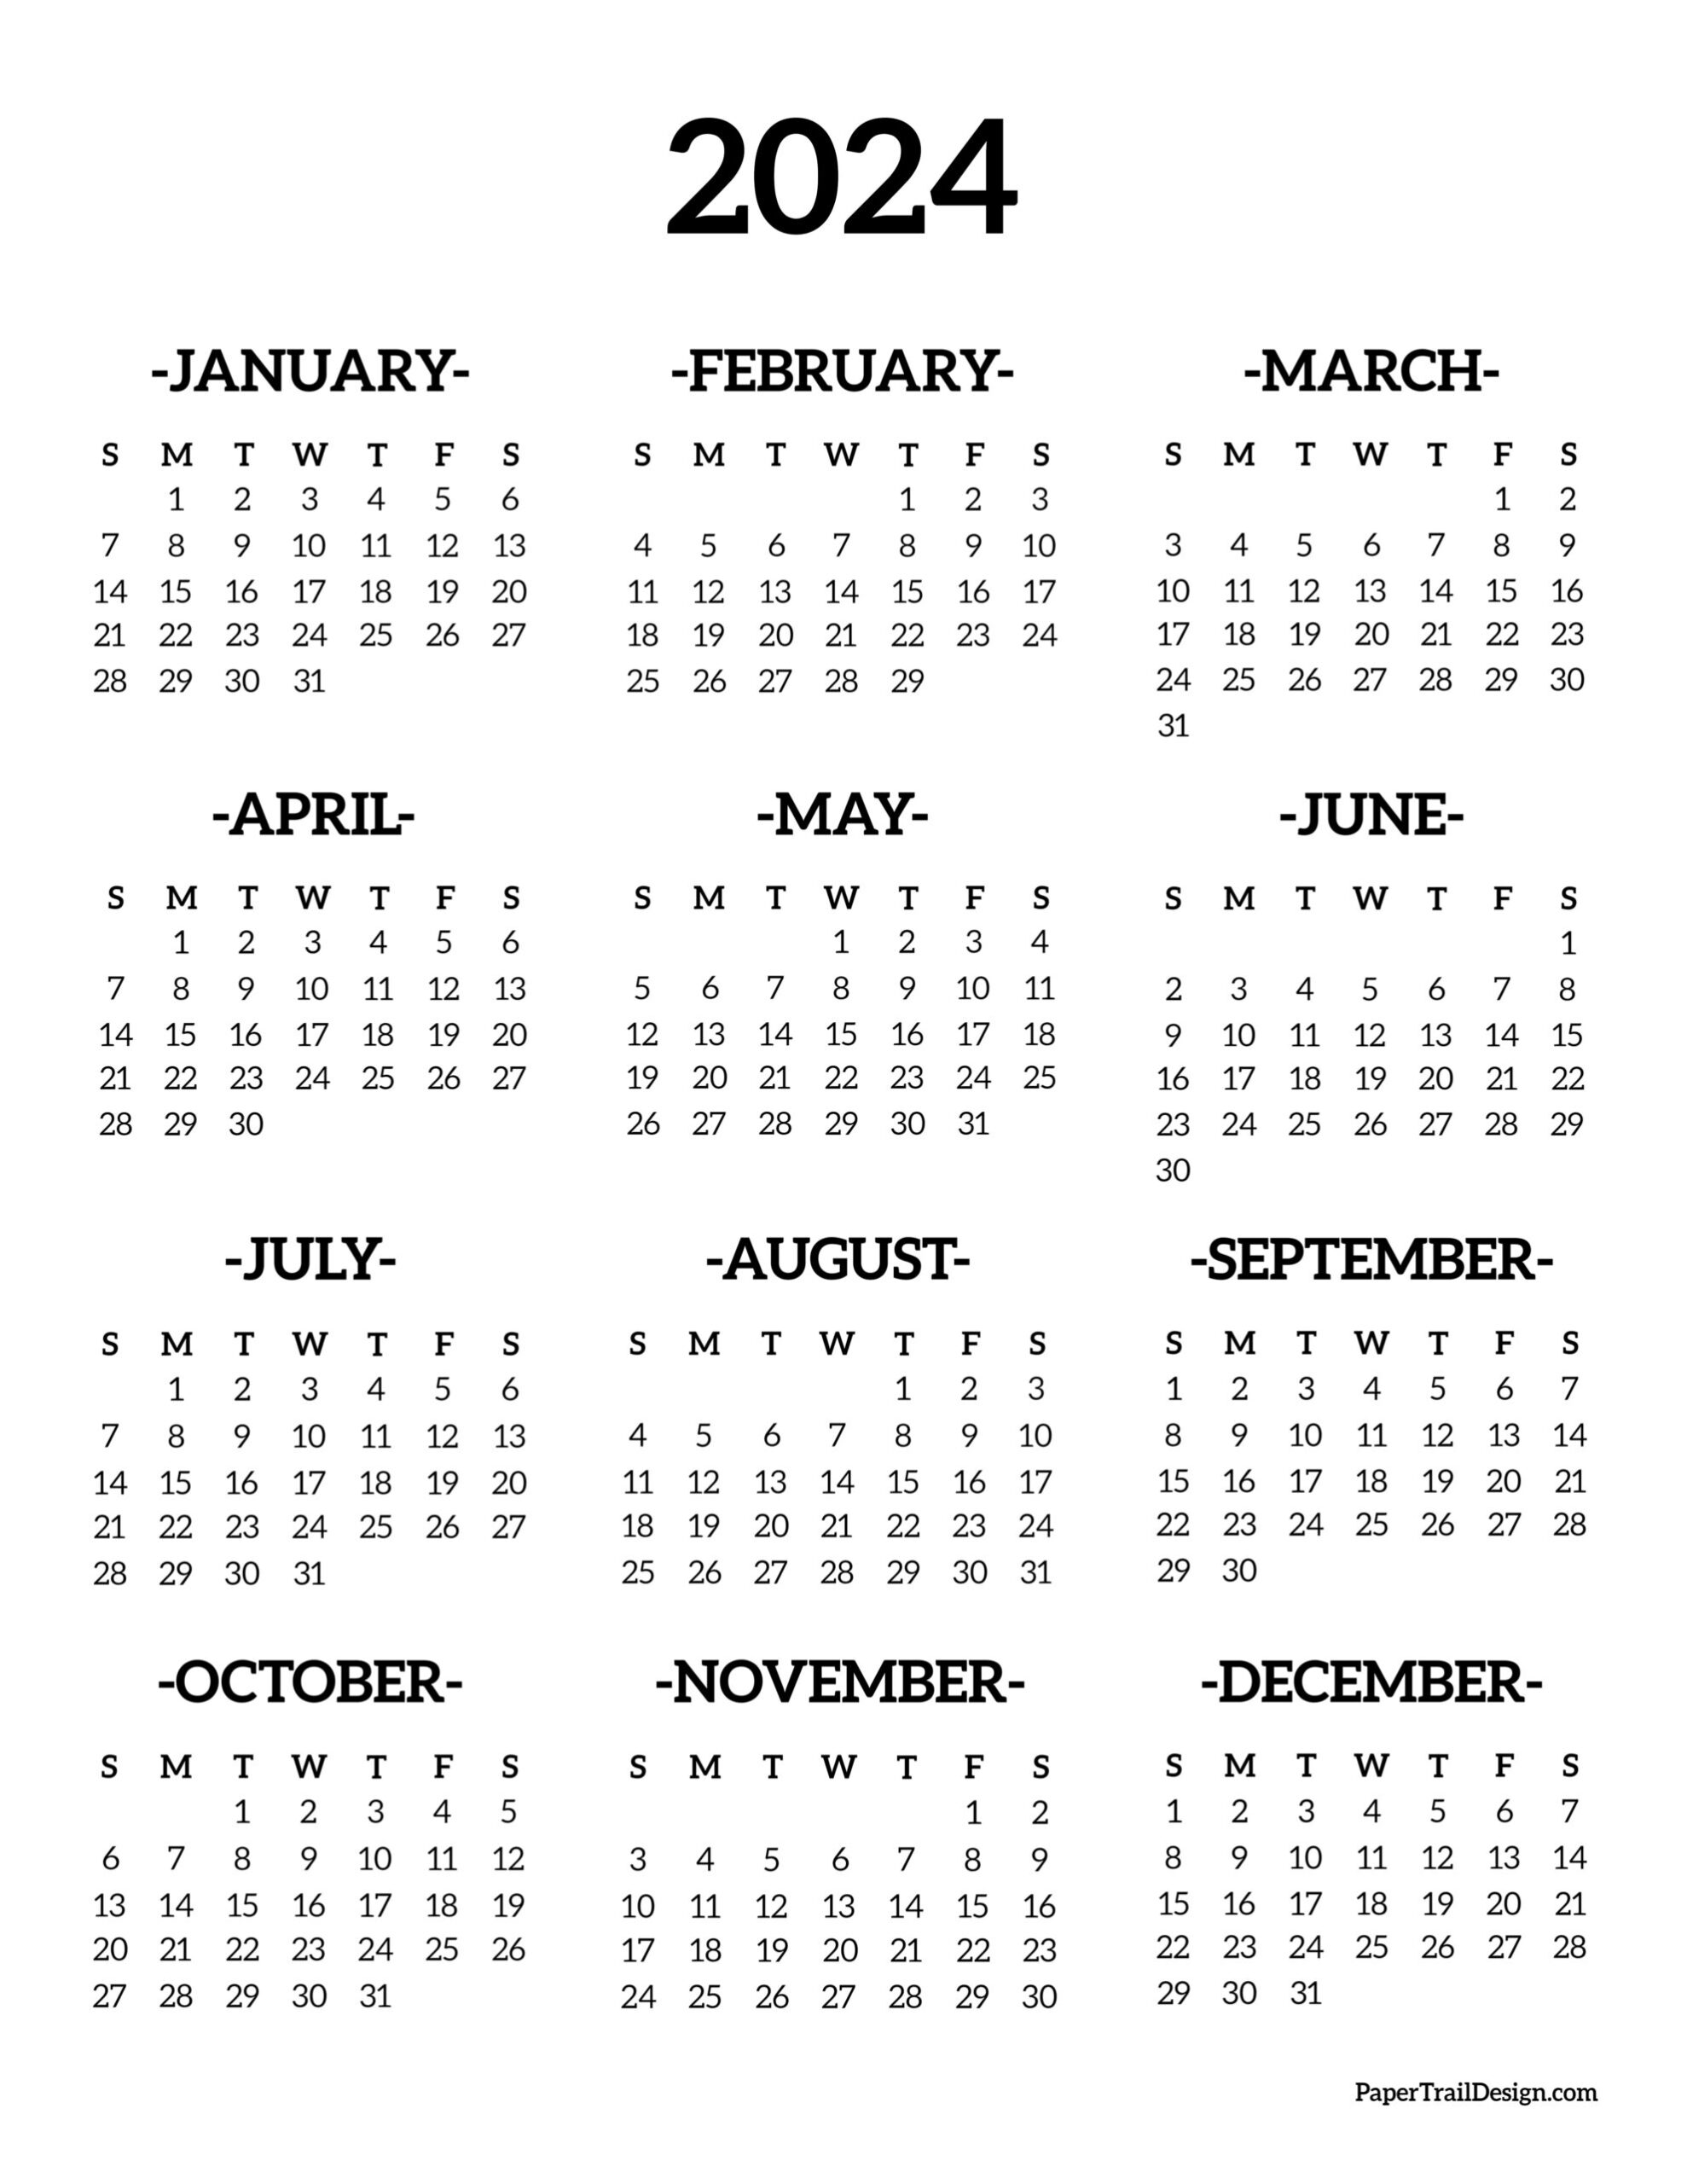 Calendar 2024 Printable One Page - Paper Trail Design for 2024 Calendar Printable Free